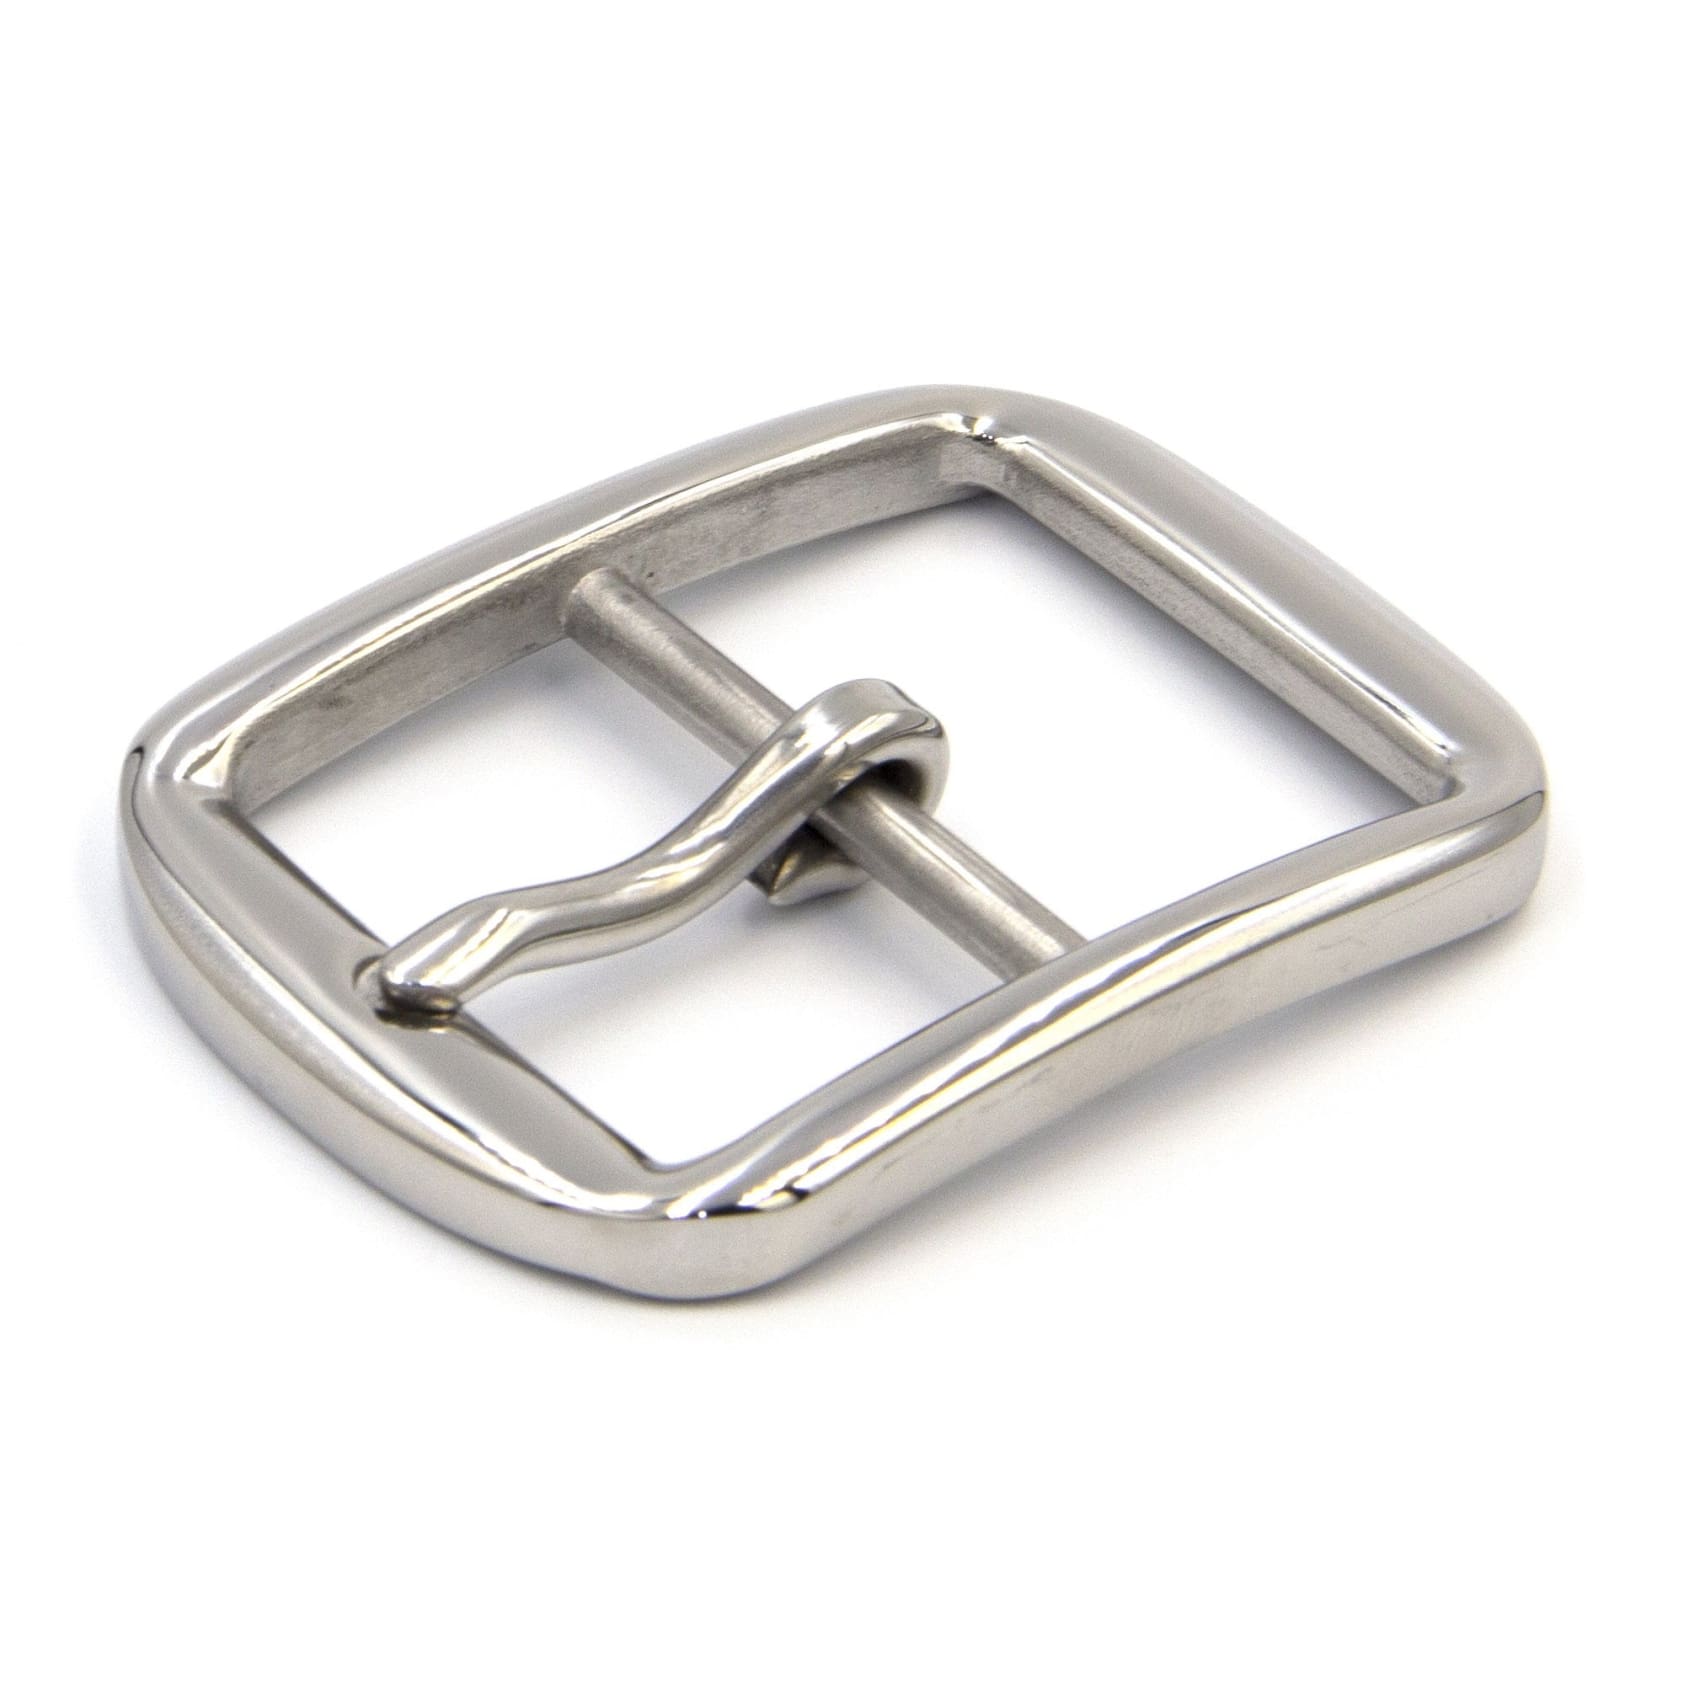 Stainless steel belt buckle new design for belt 38-40 mm - Metal Field Shop